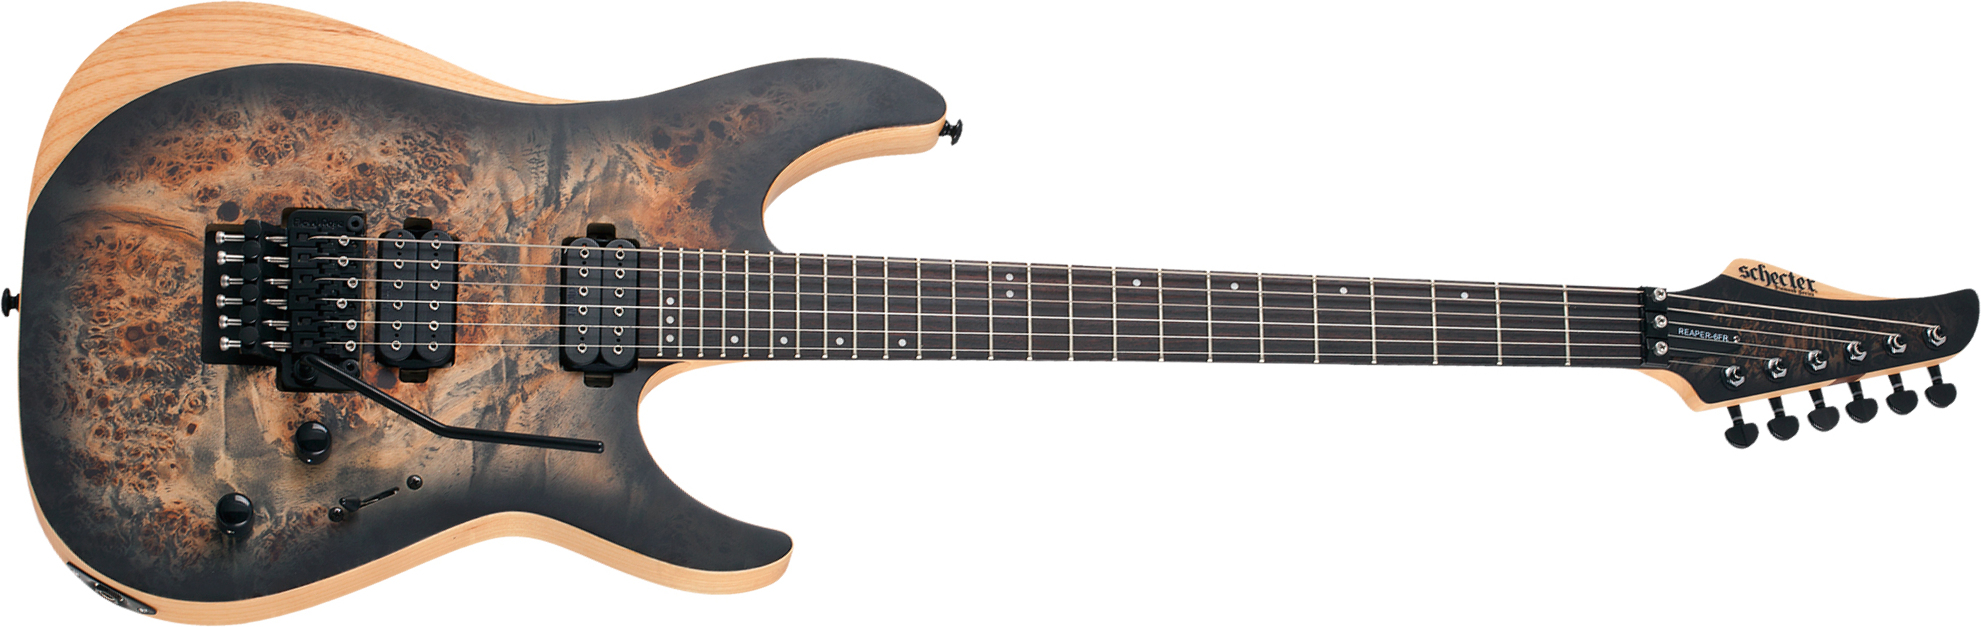 Schecter Reaper-6 Fr 2h Eb - Satin Charcoal Burst - Str shape electric guitar - Main picture